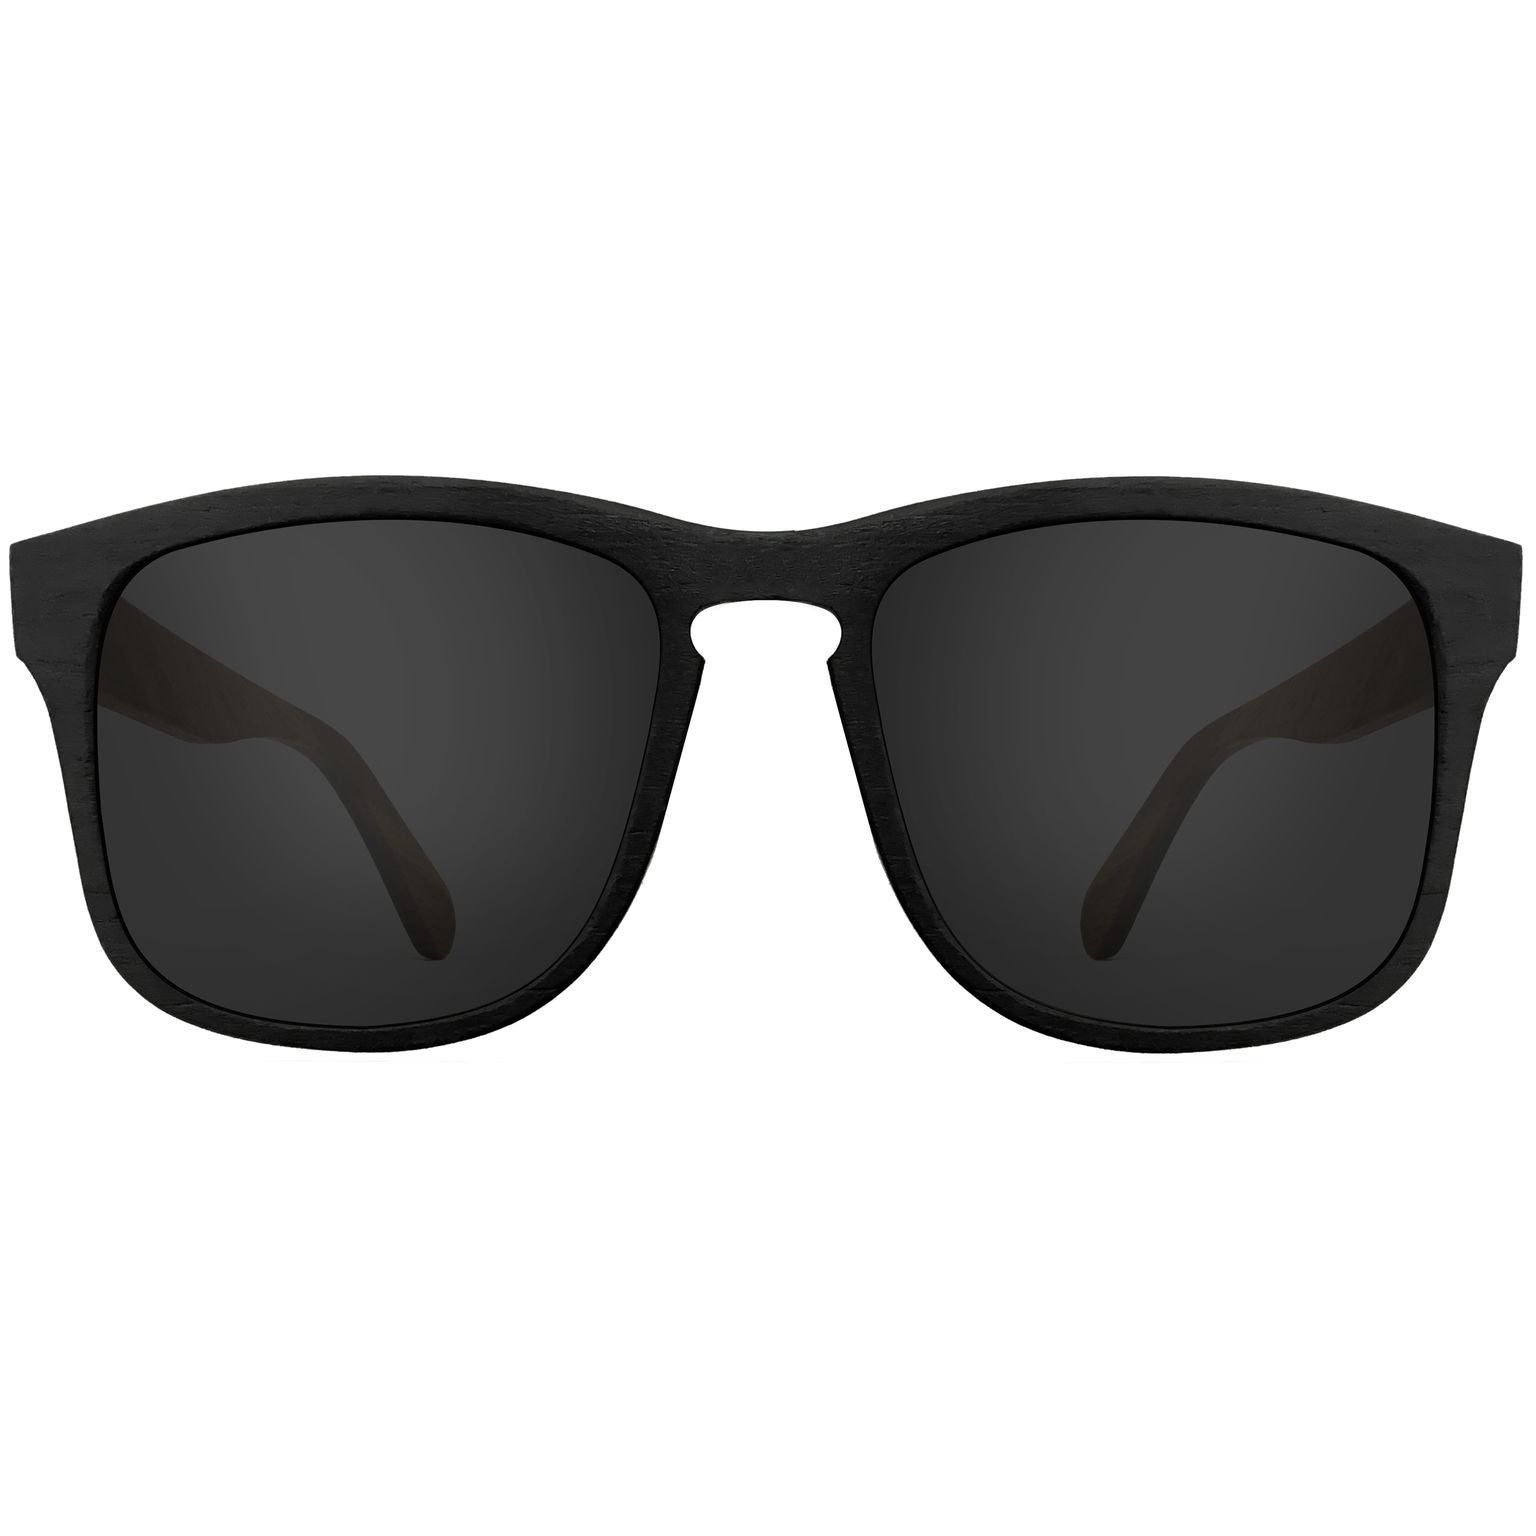 Zylo Amberjack in Black sunglasses